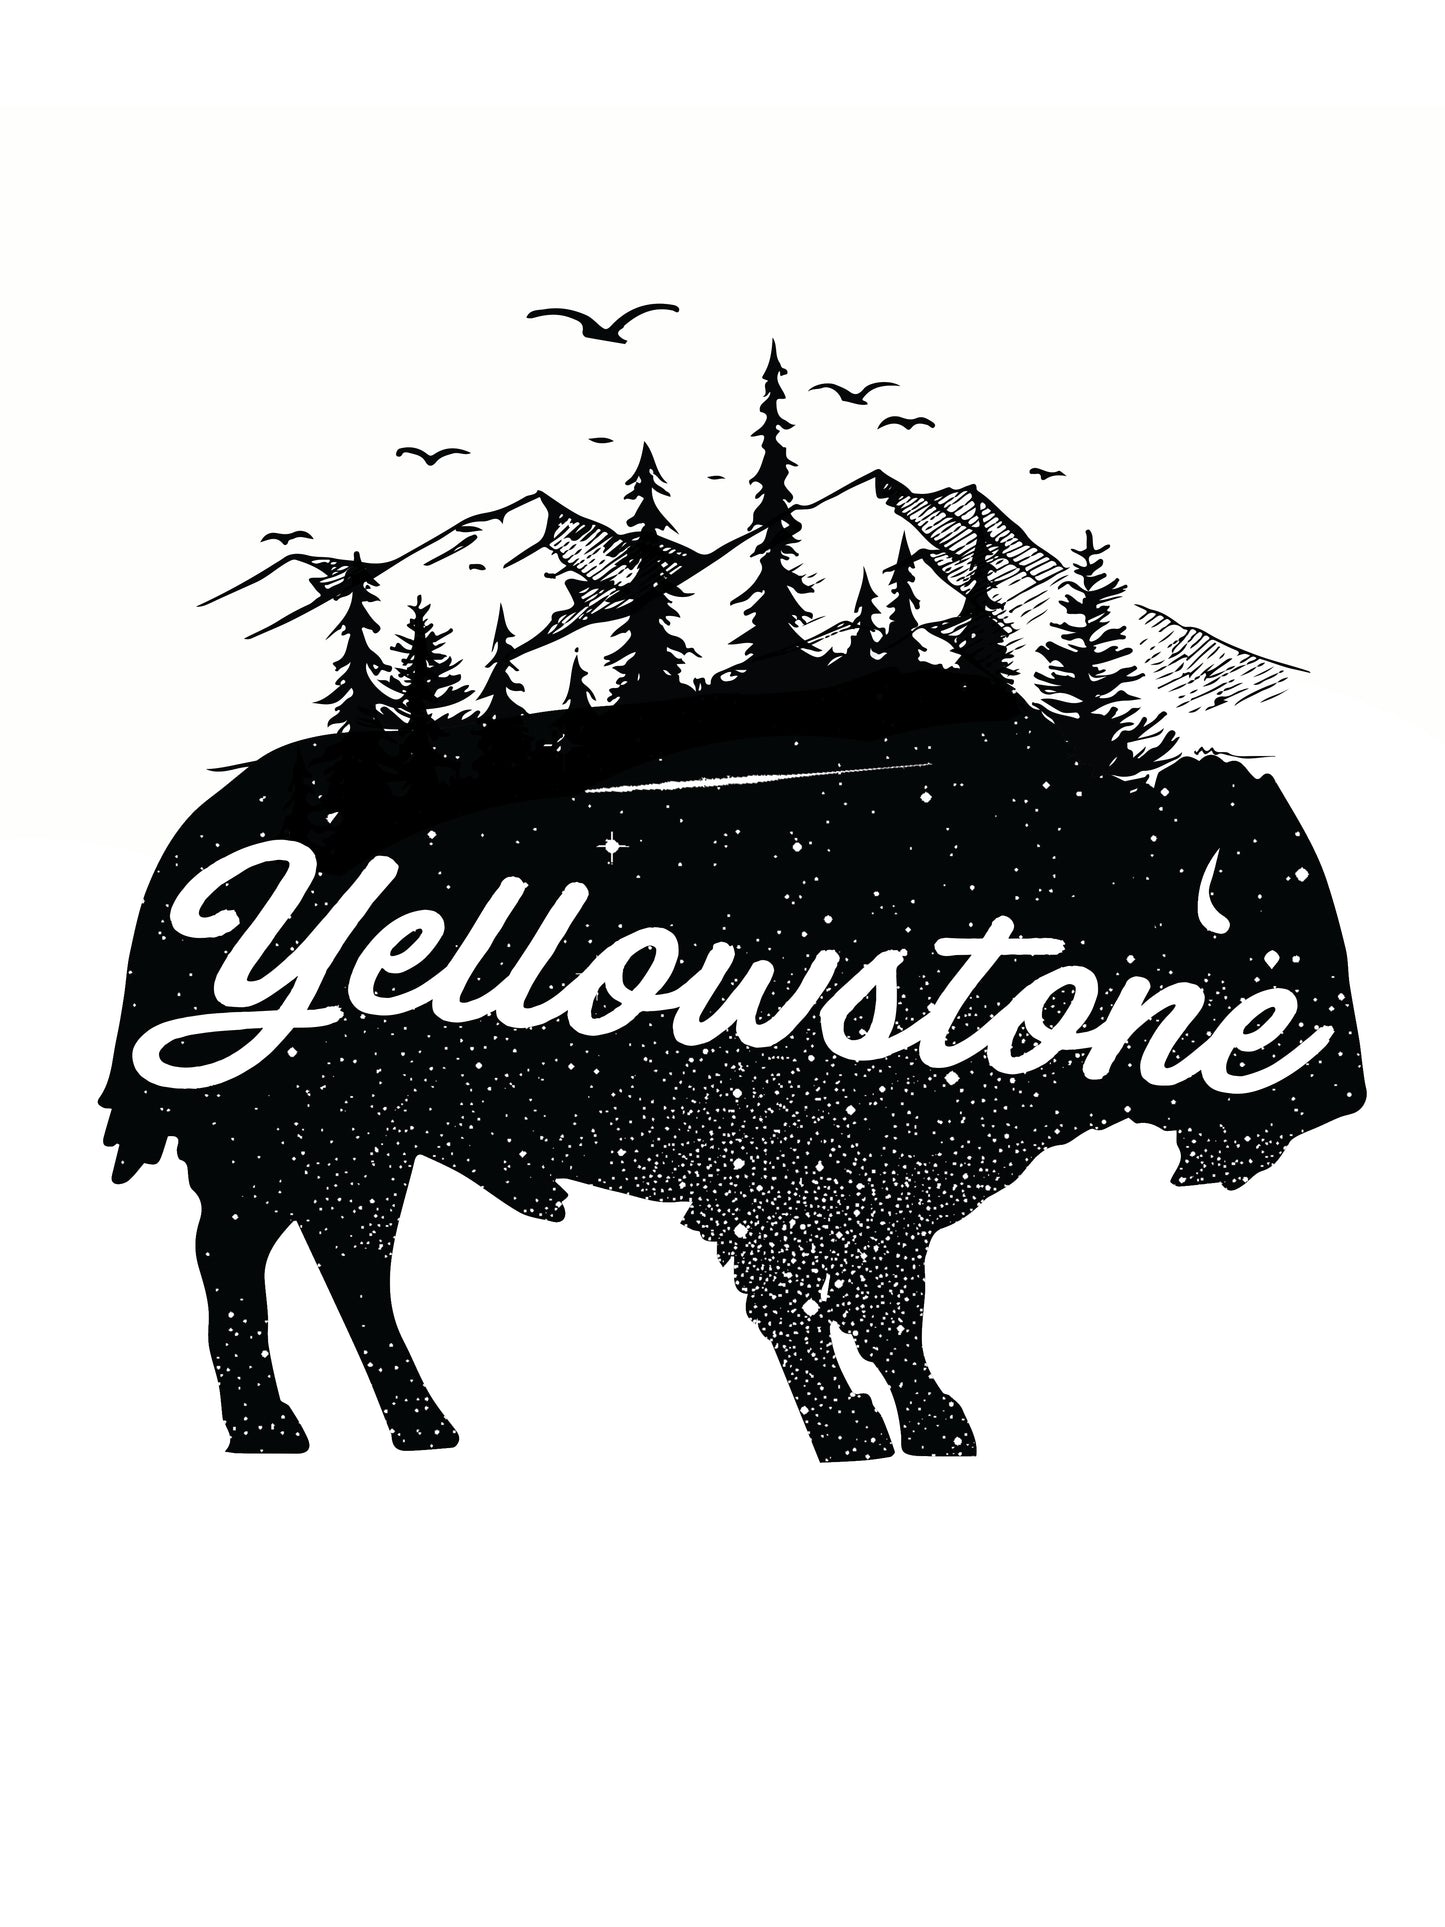 Yellowstone 13 x 19 Poster Print